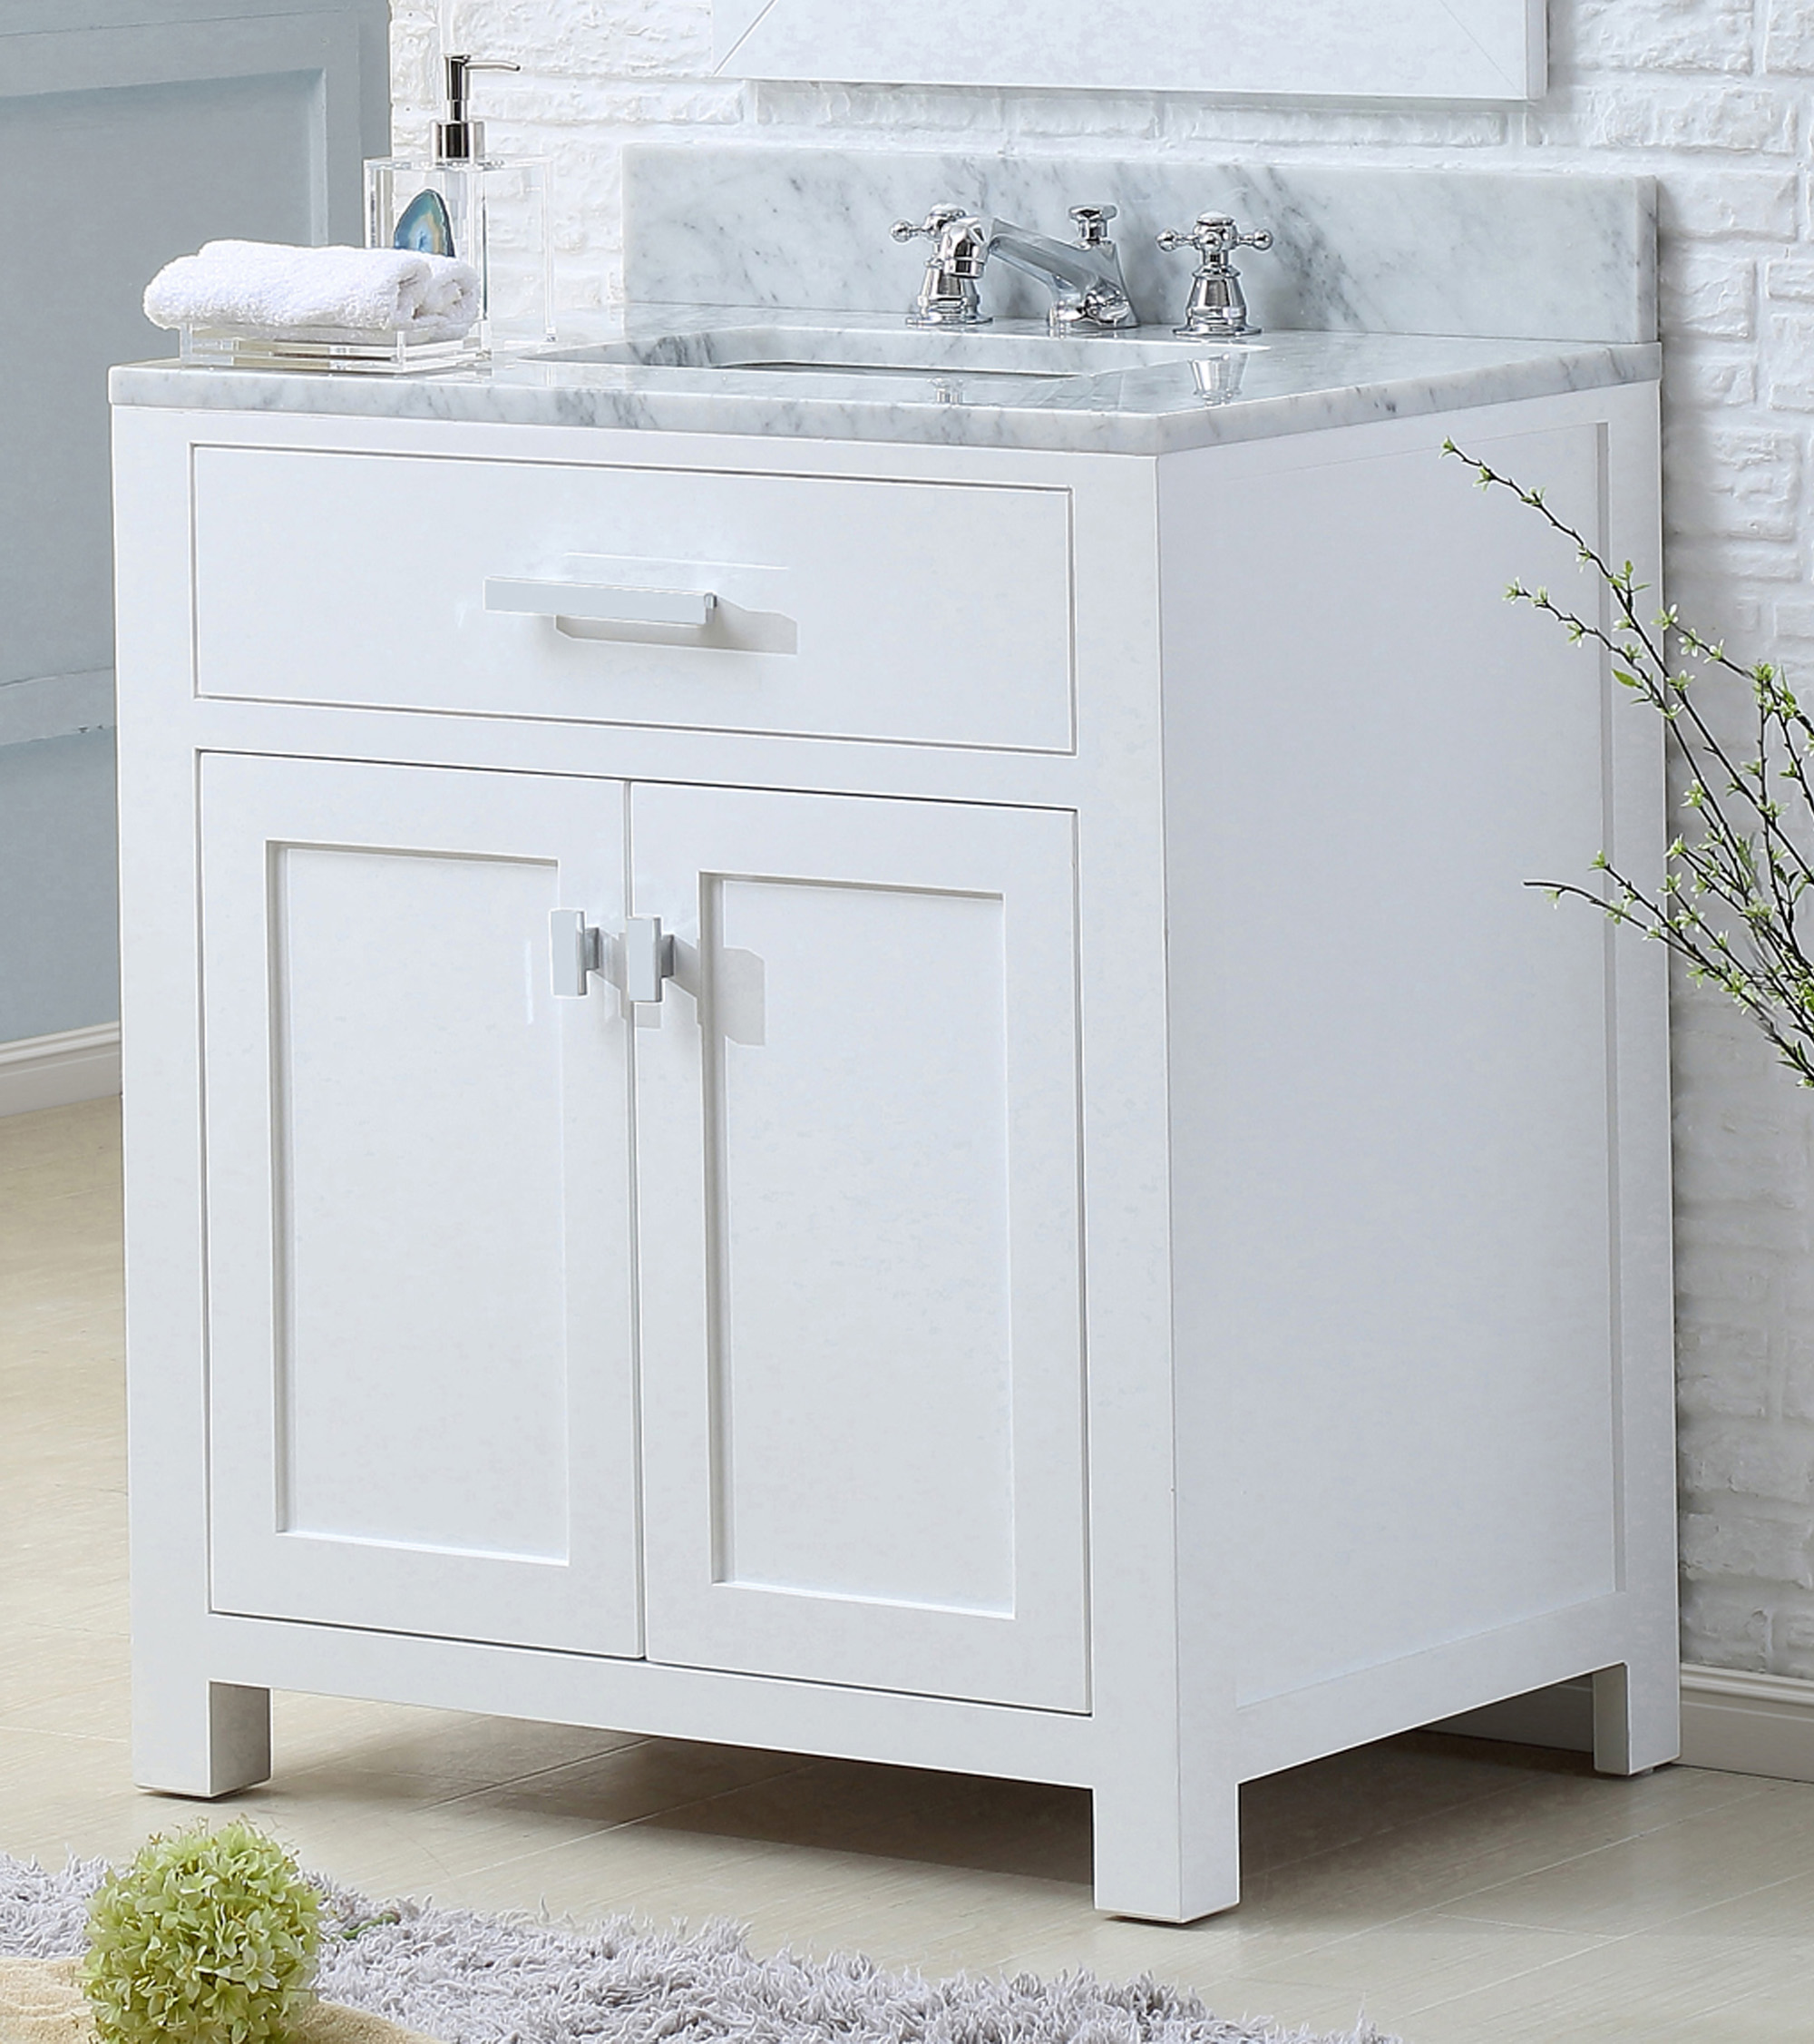 White Bathroom Vanity With Top - Image to u